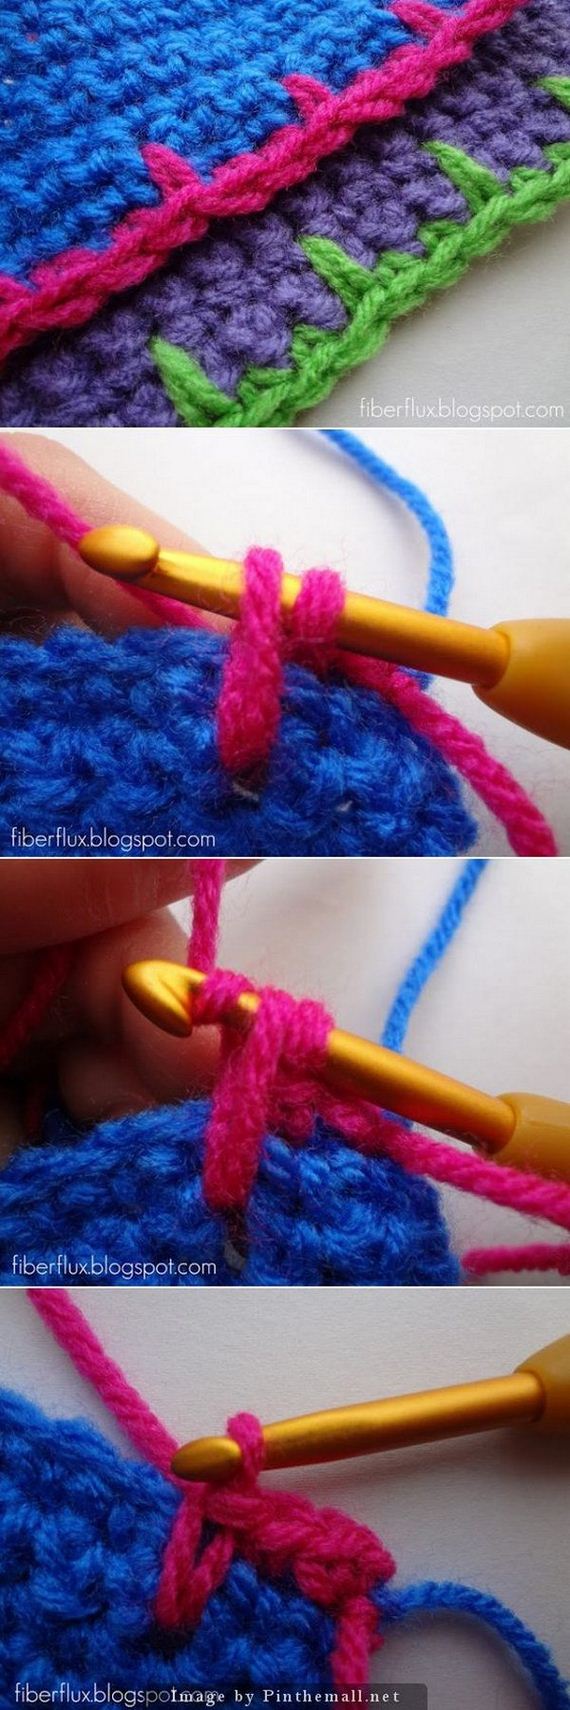 10-crochet-edging